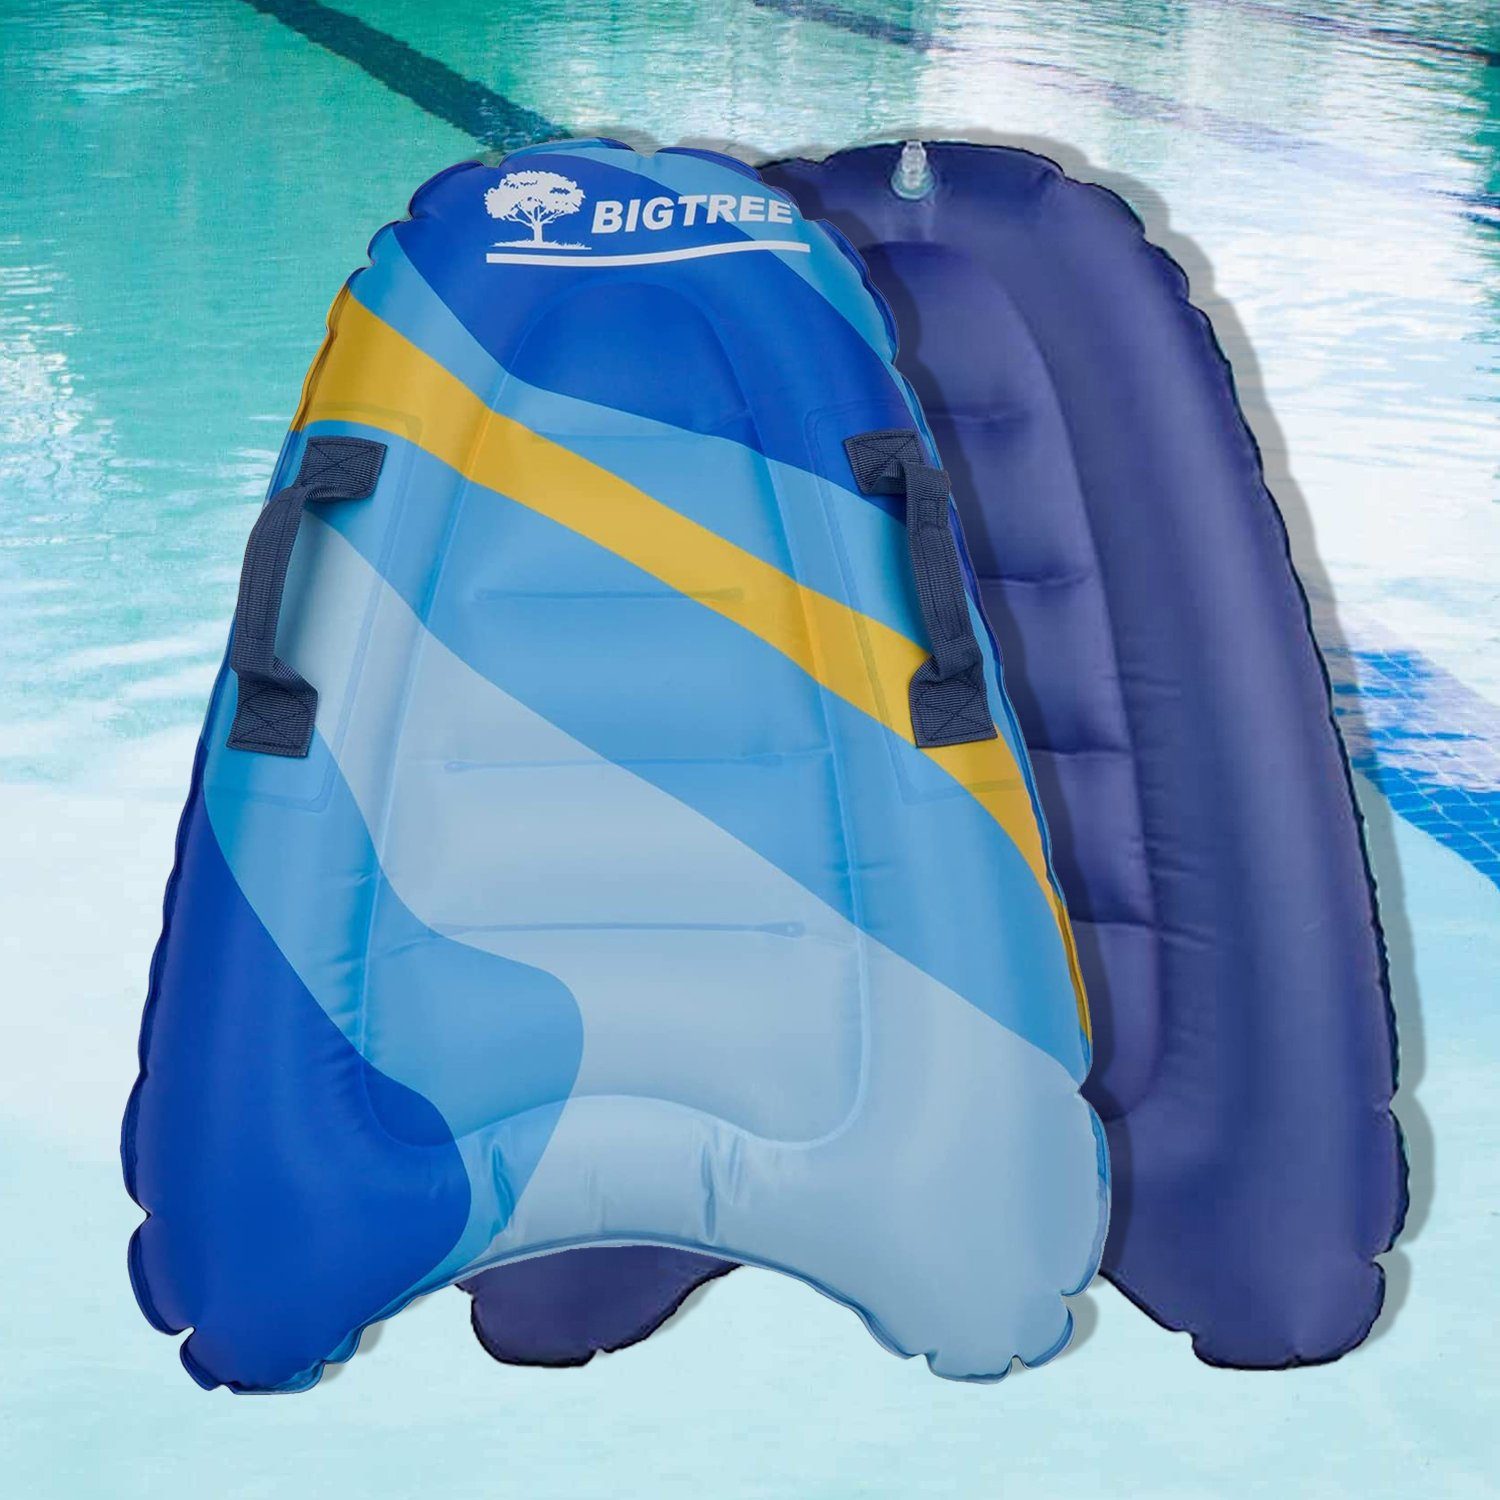 KAHOO Inflatable SUP-Board Aufblasbares Bodyboard, 52x14x70cm, Schwimmhilfe Blau